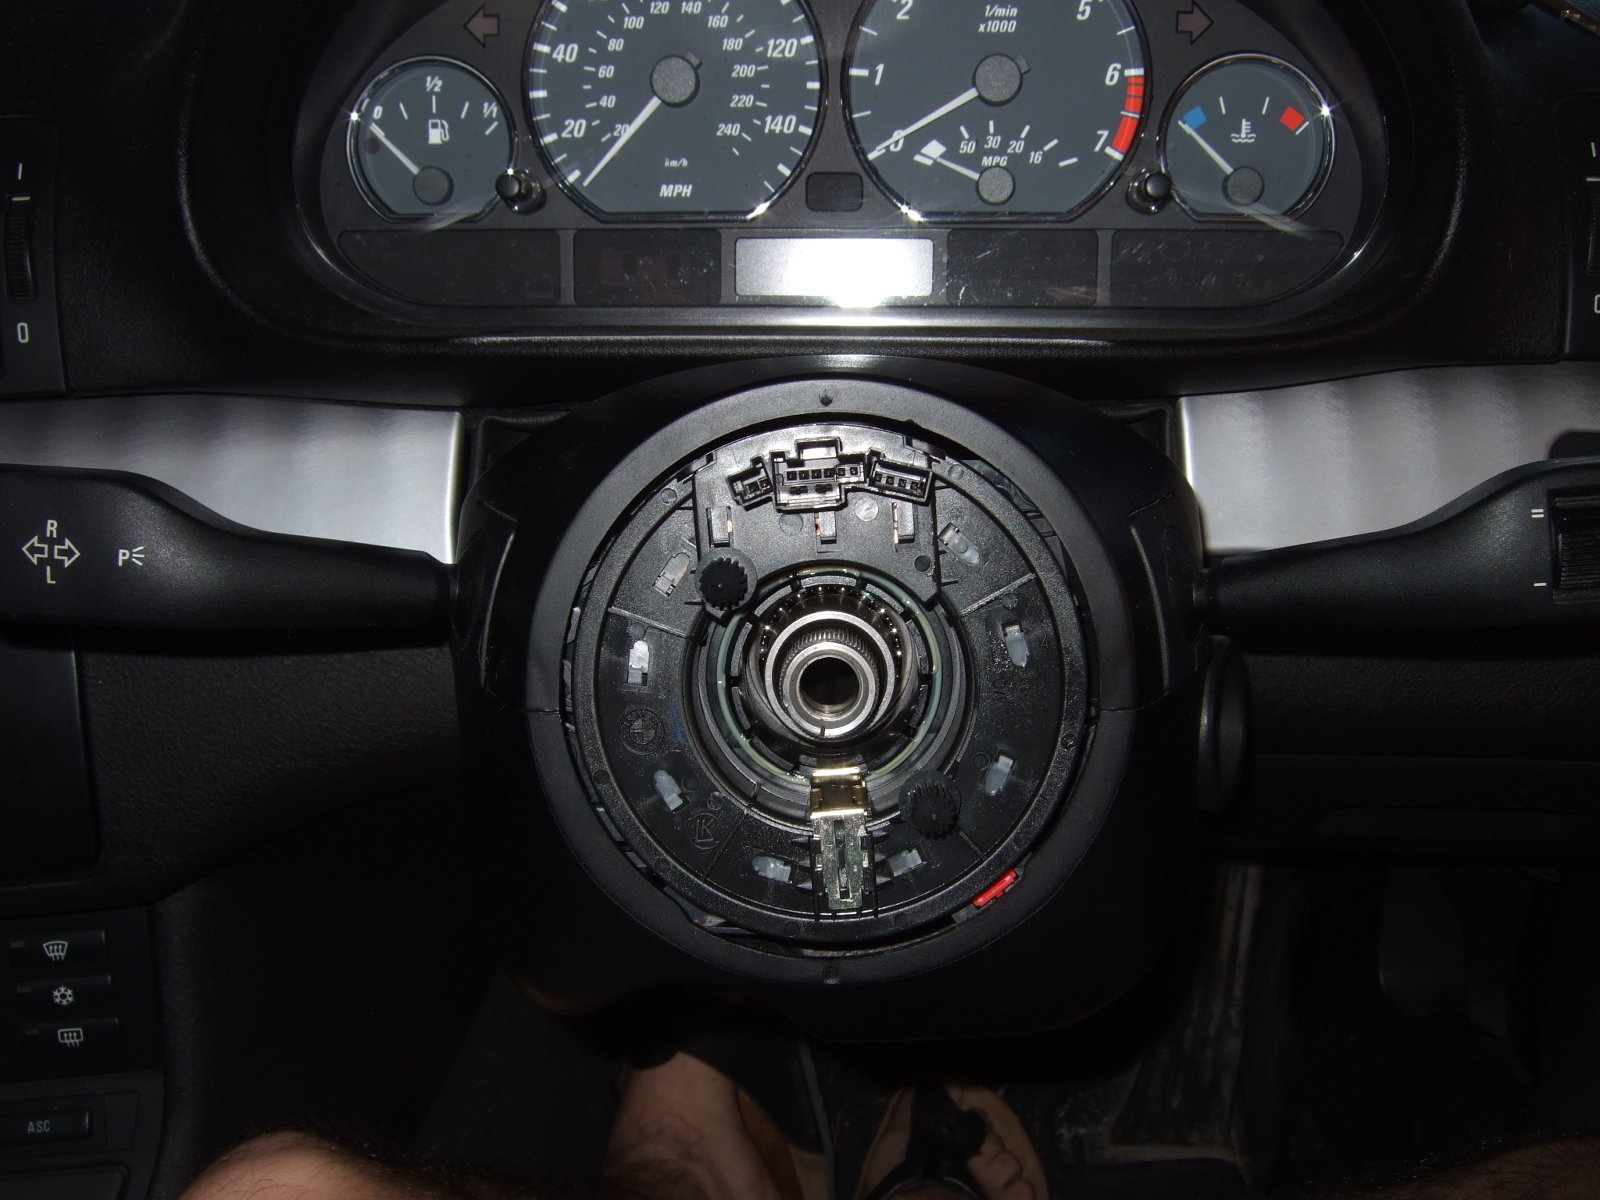 Bmw steering wheel lock indicator #1